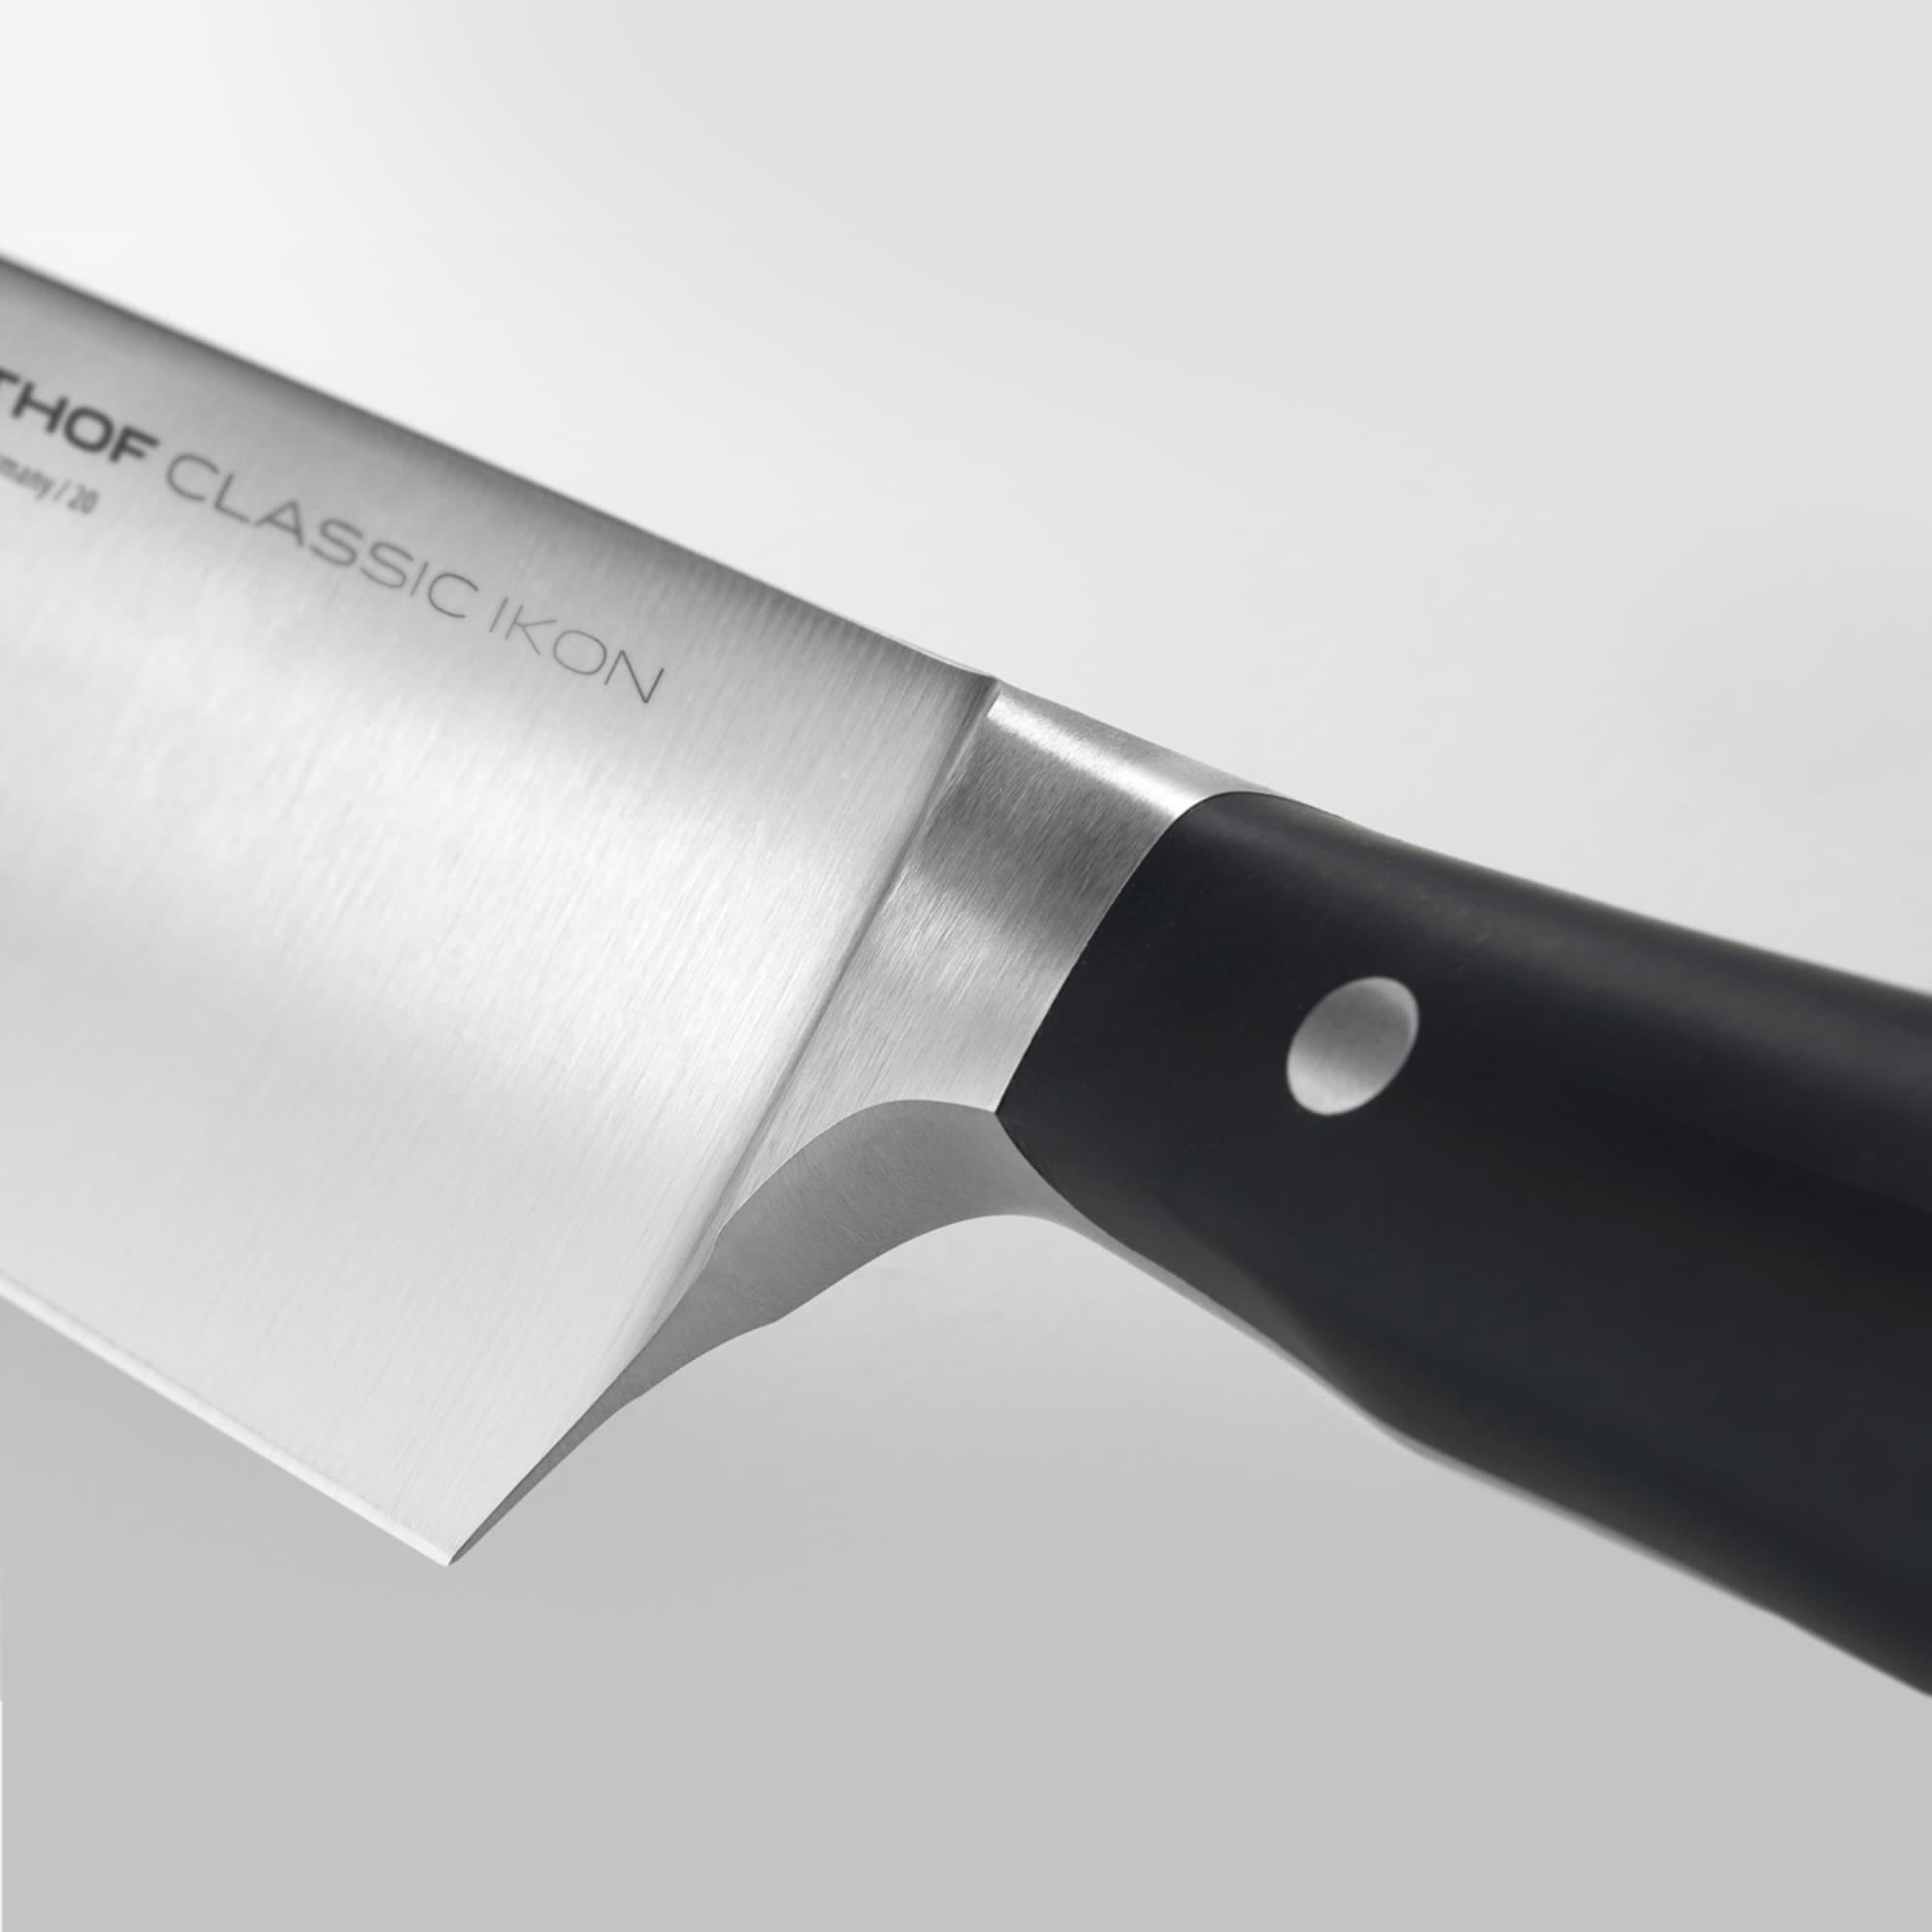 Wusthof Classic Ikon Cook's Knife 20cm Image 2